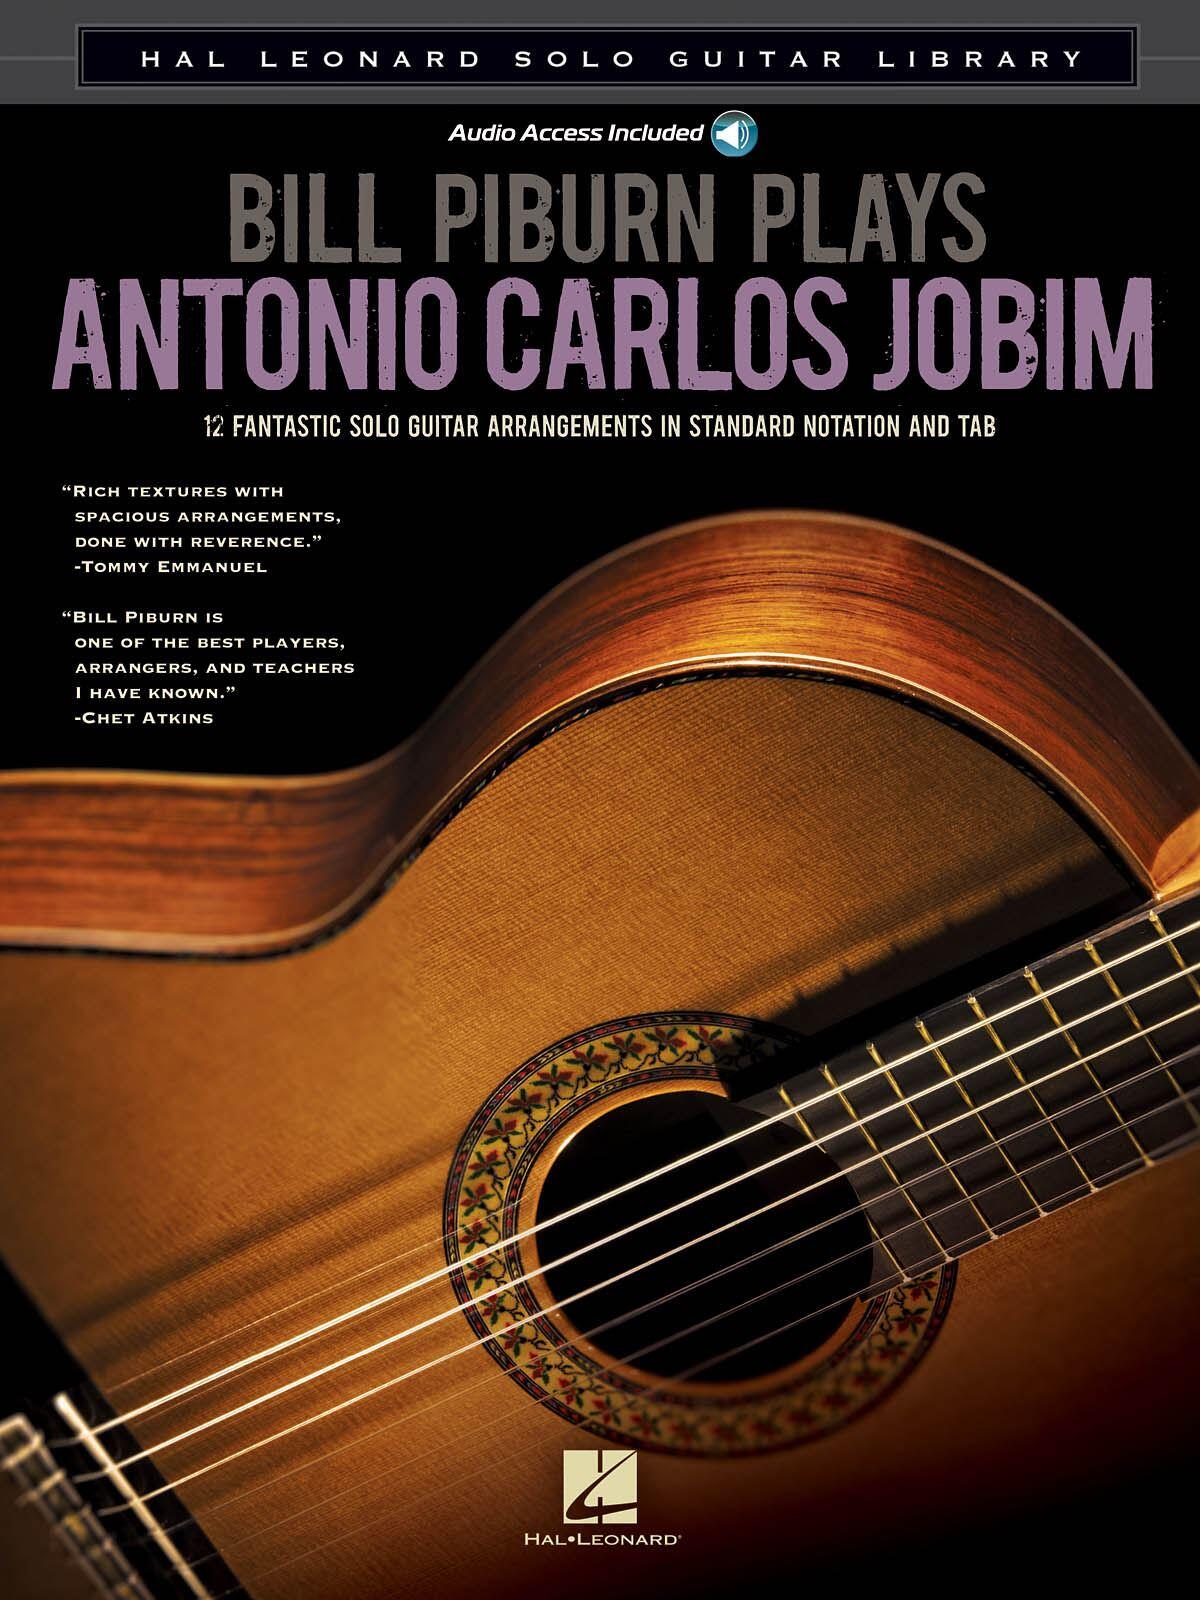 Bill Piburn Plays Antonio Carlos Jobim Solo Guitar Library : photo 1